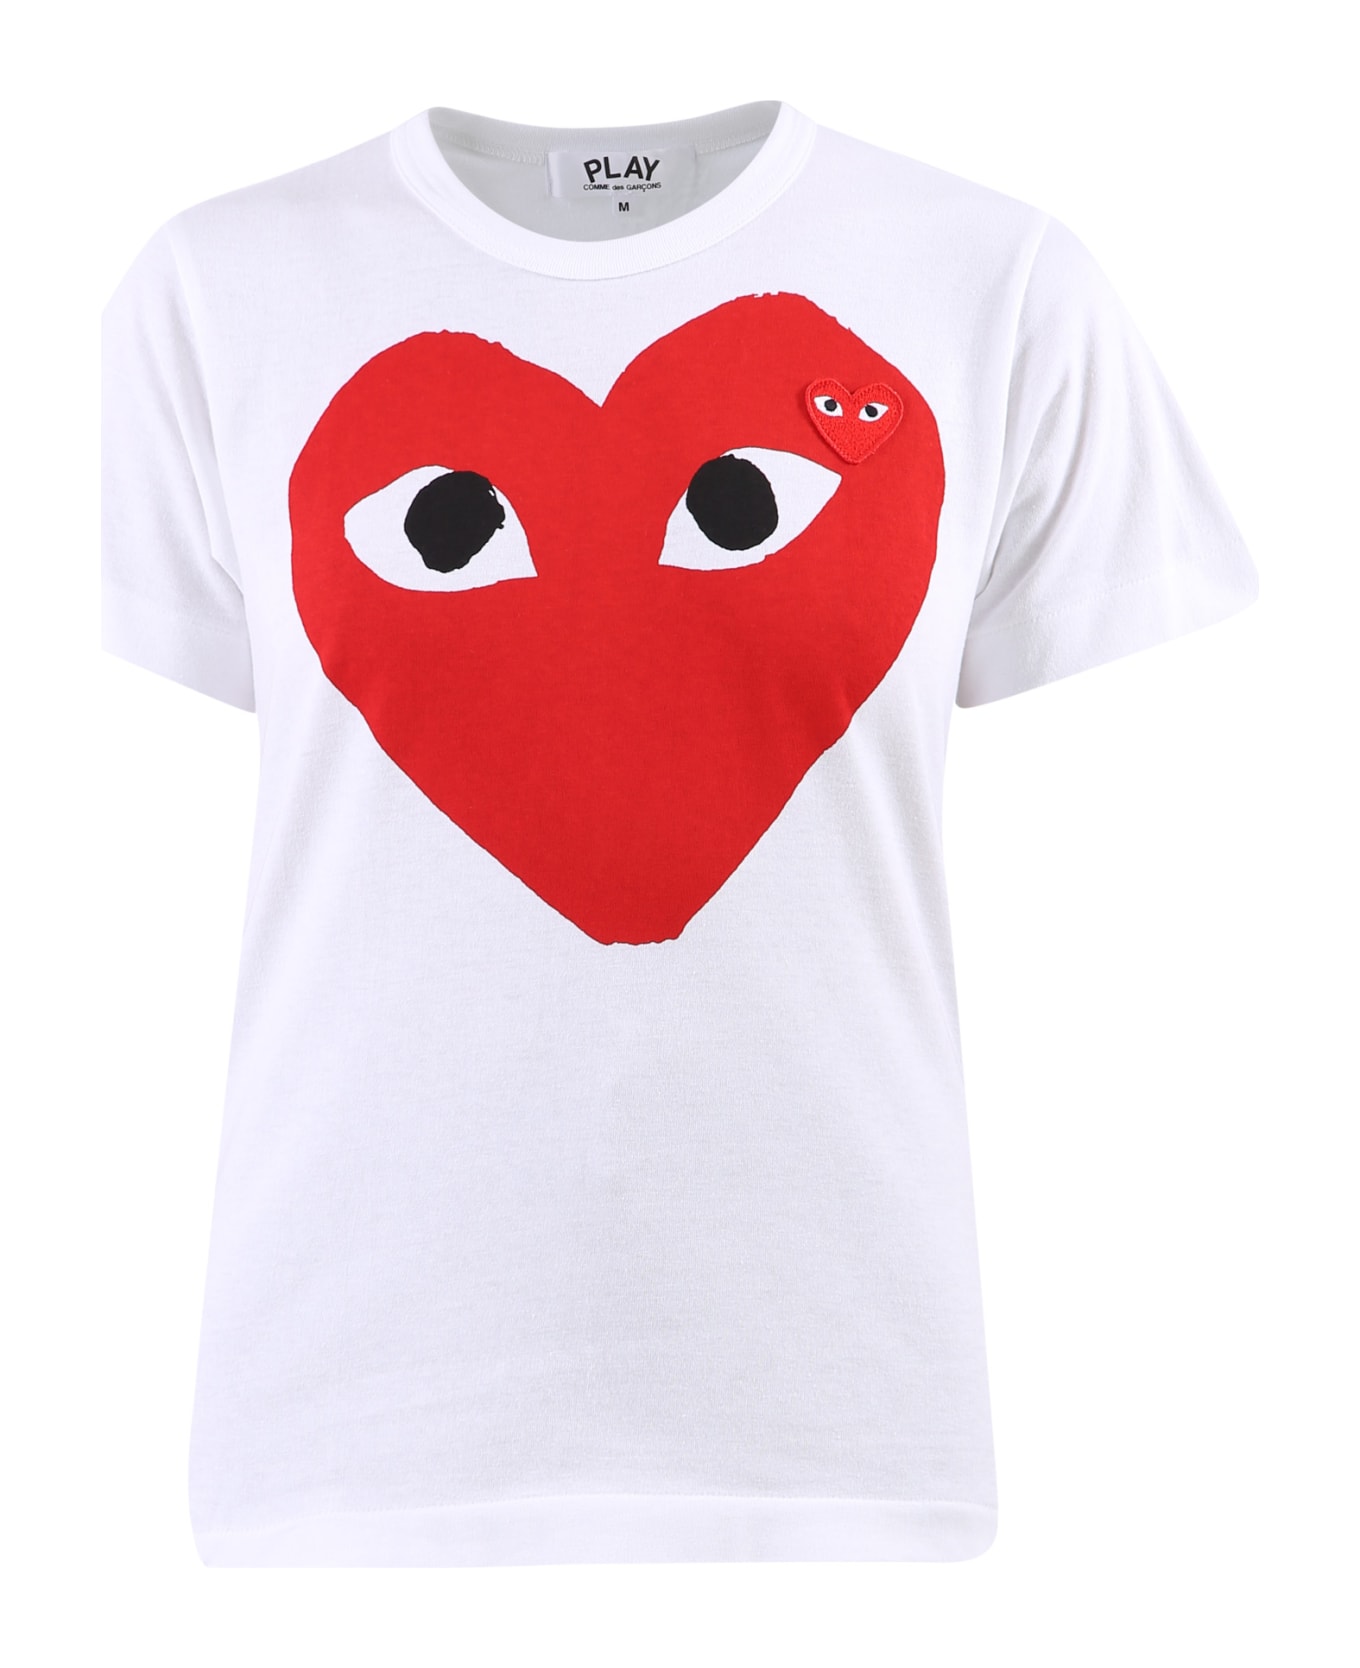 Comme des Garçons Play Printed T-shirt - WHITE/RED